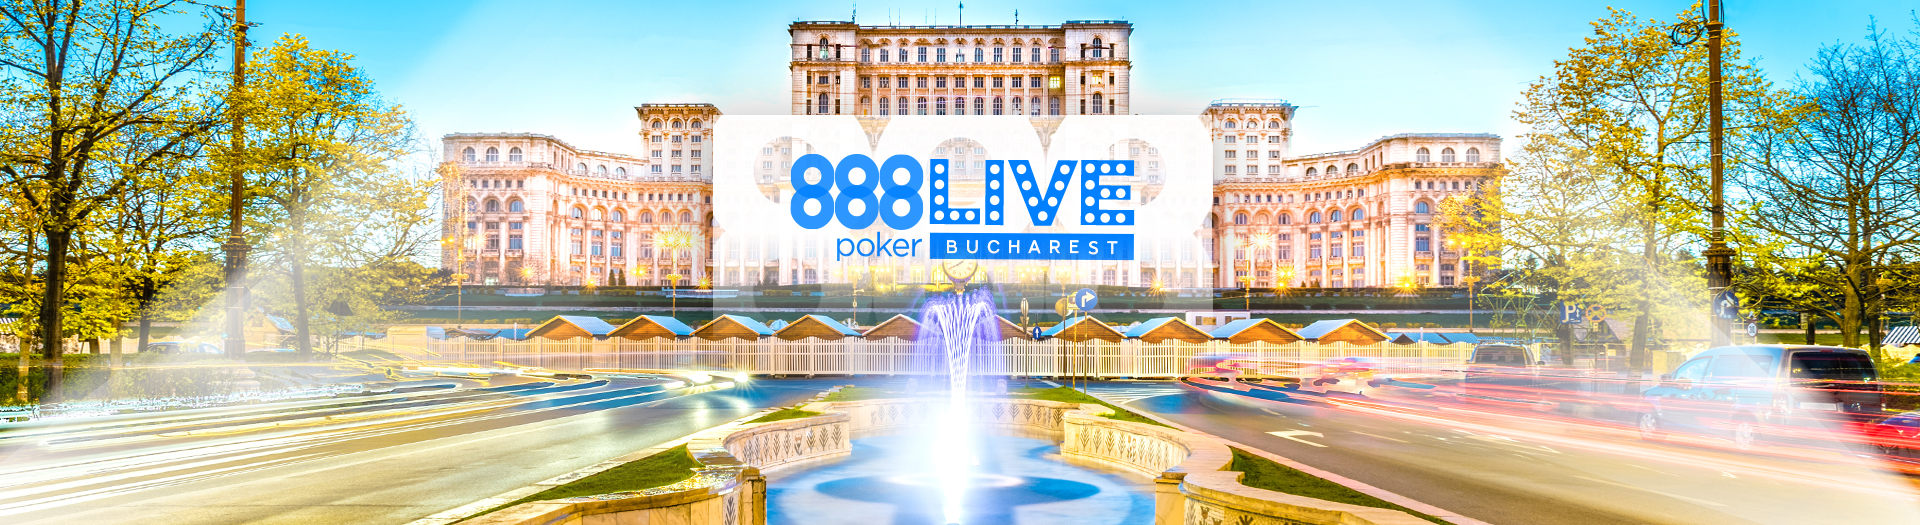 888poker LIVE Bucharest June 20-26